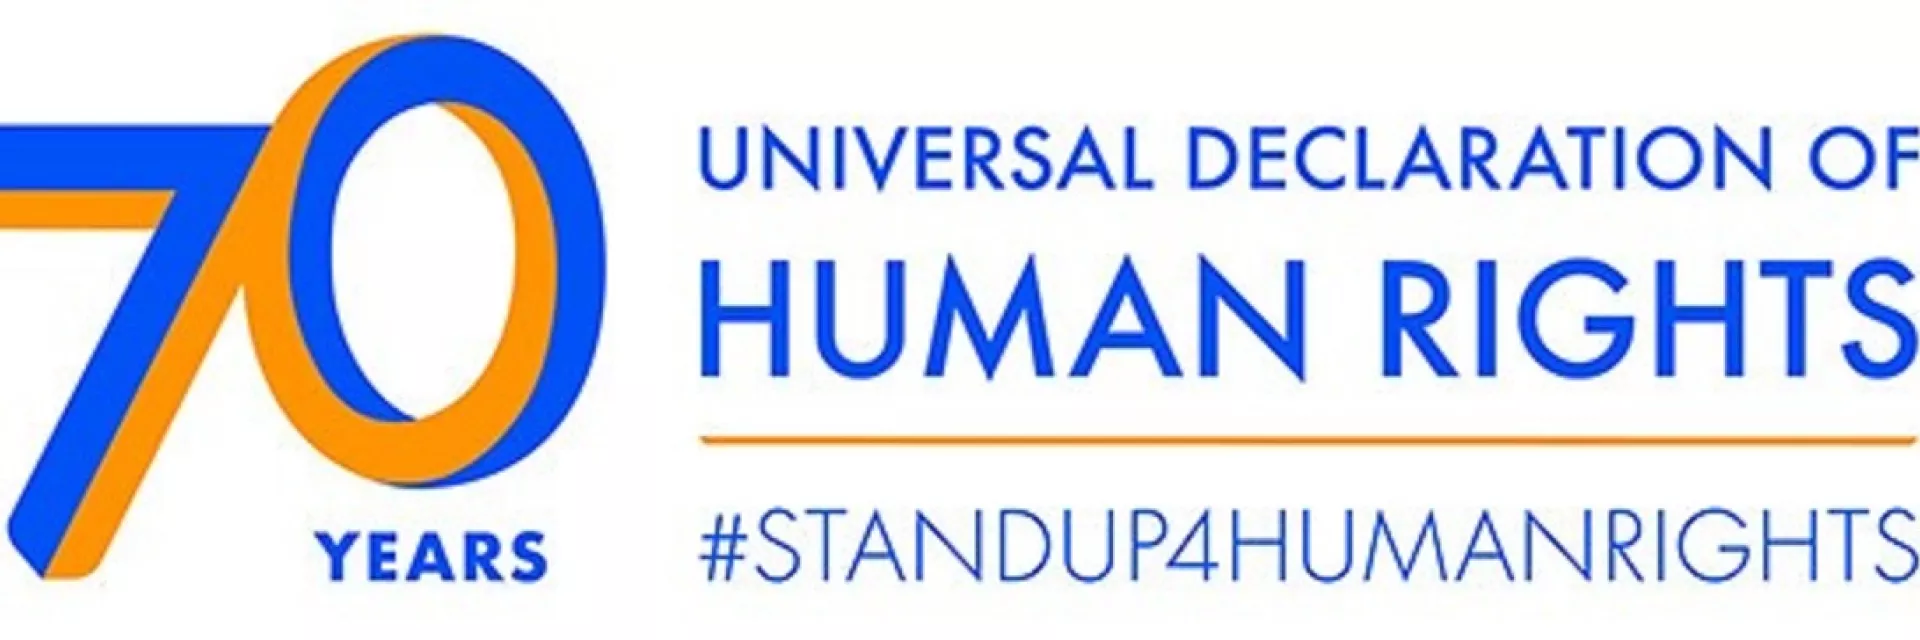 UN Human Rights banner